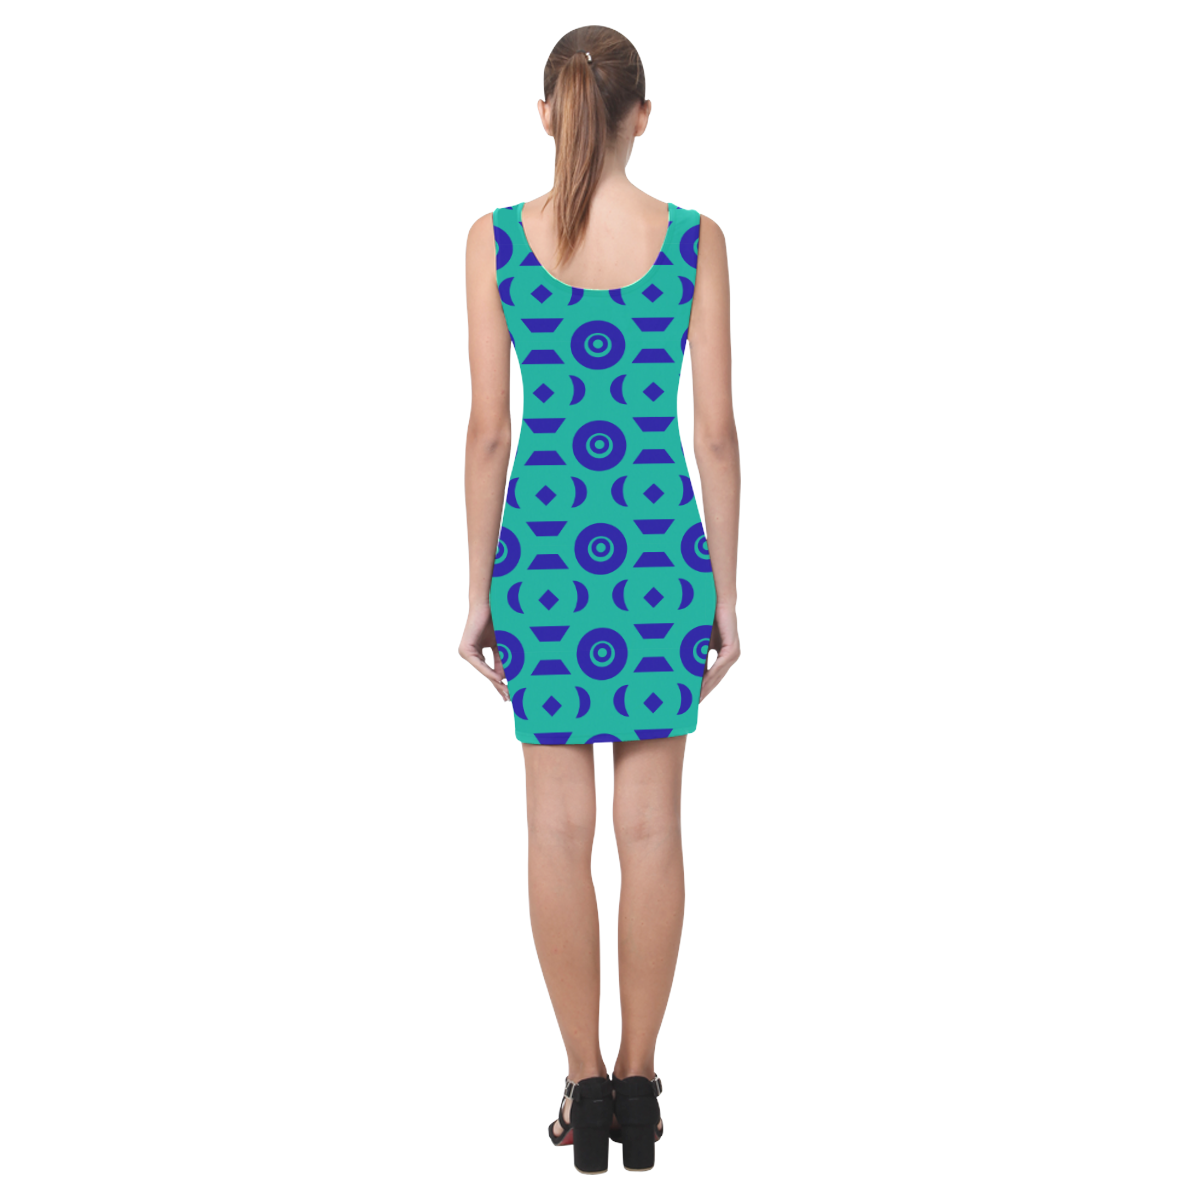 Blue Geometric Shapes in Turquoise Medea Vest Dress (Model D06)